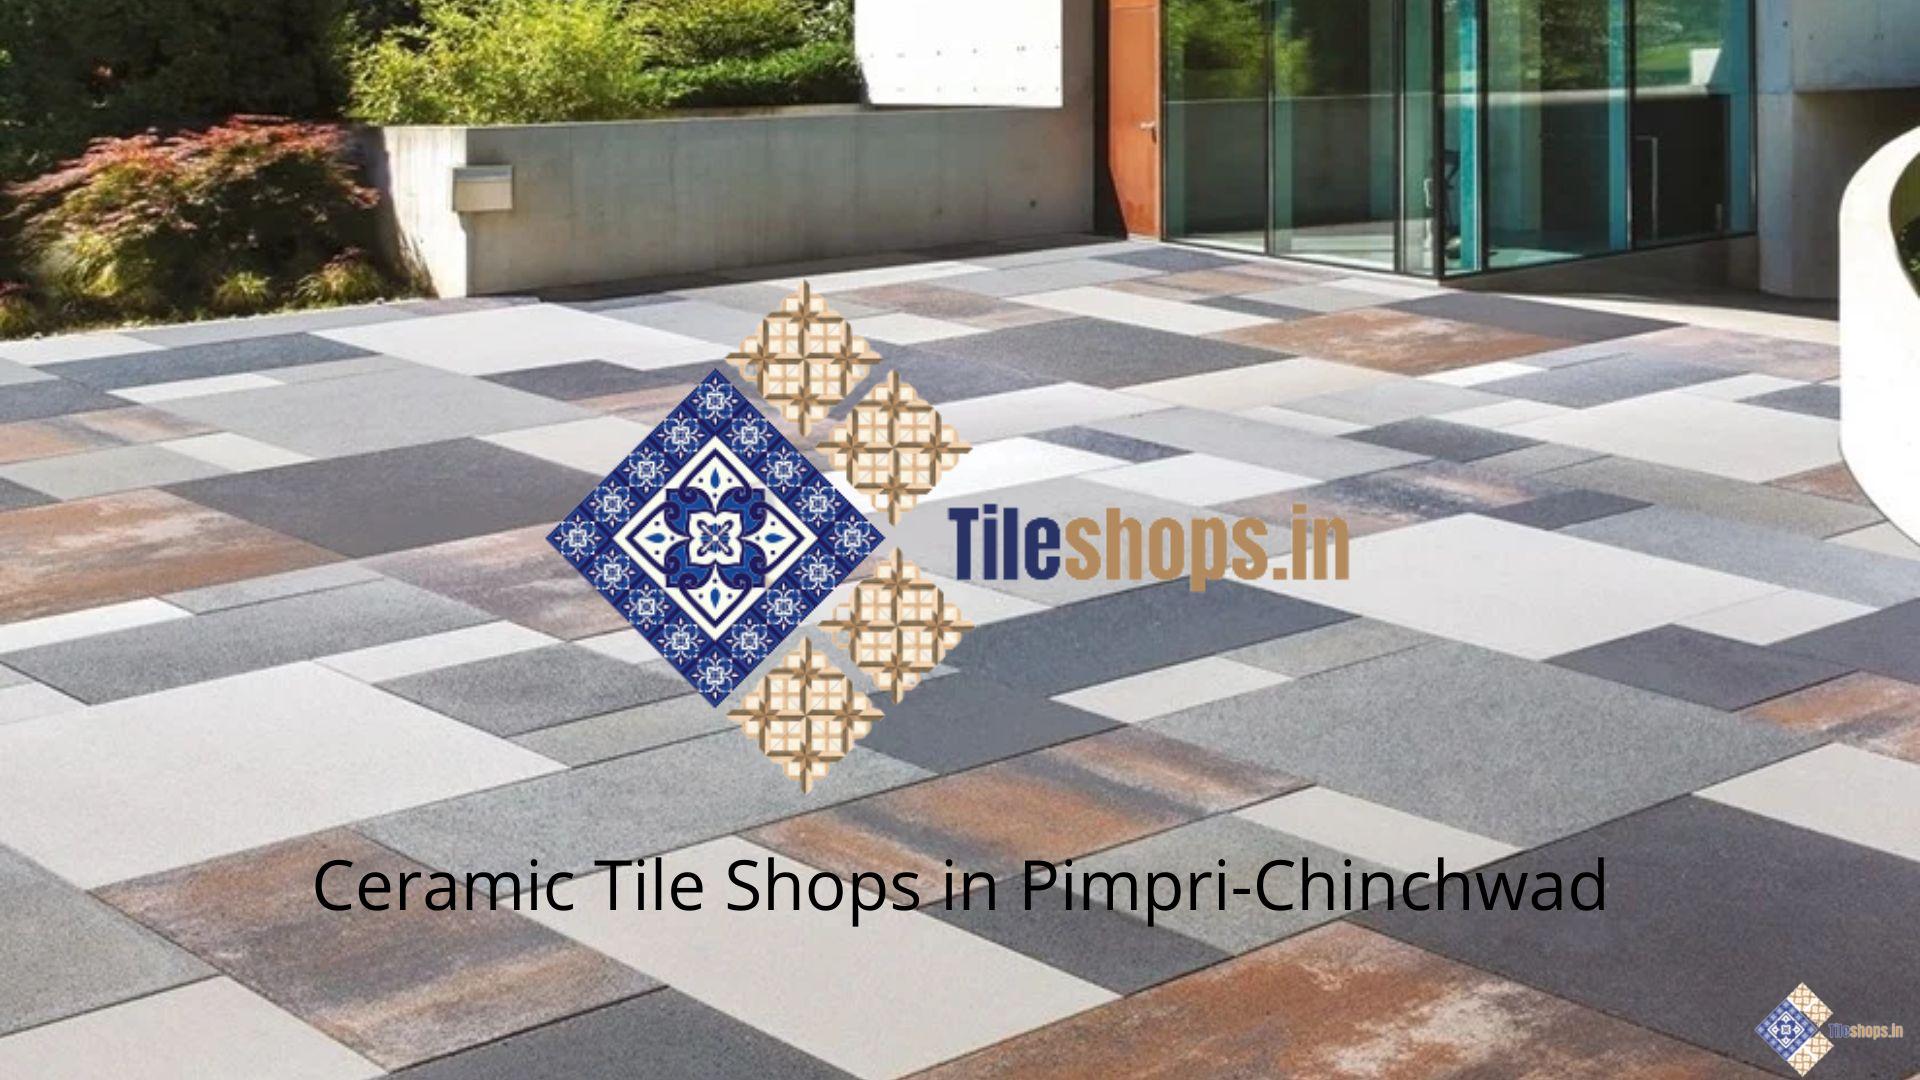 Ceramic Tile Shops in Pimpri-Chinchwad